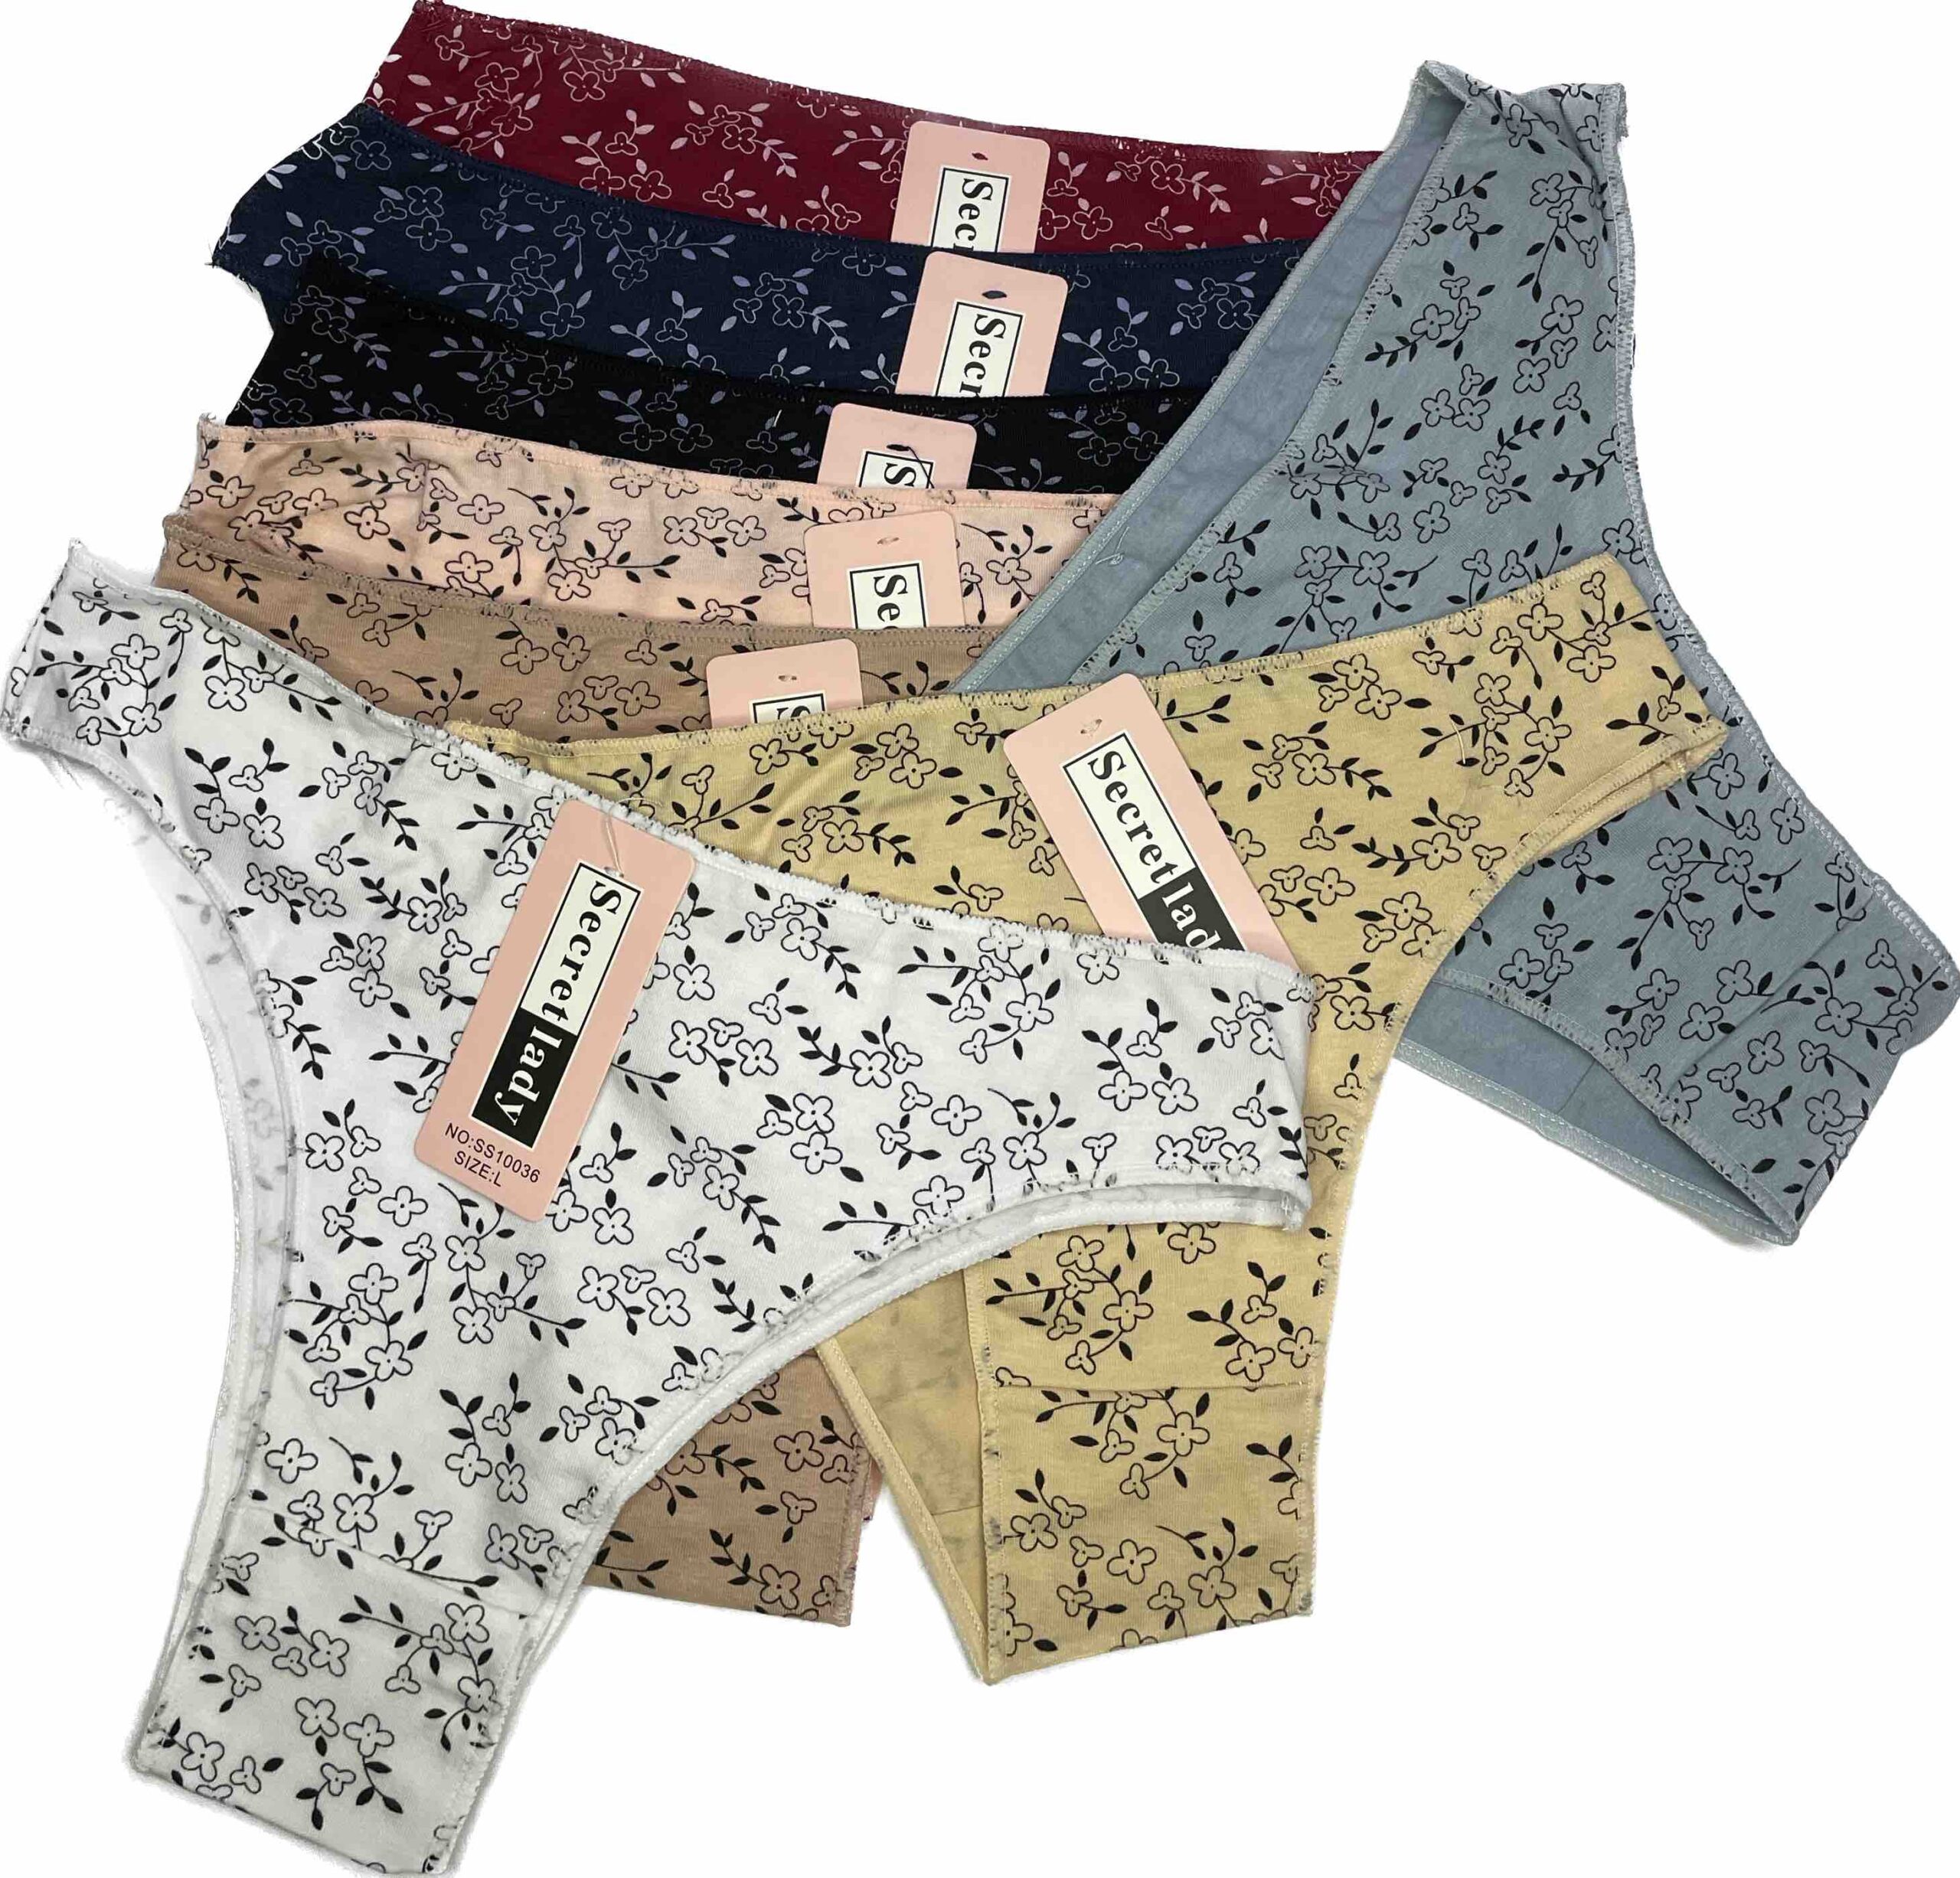 Women's underwear 95% cotton 5% polyester 7 colors per piece